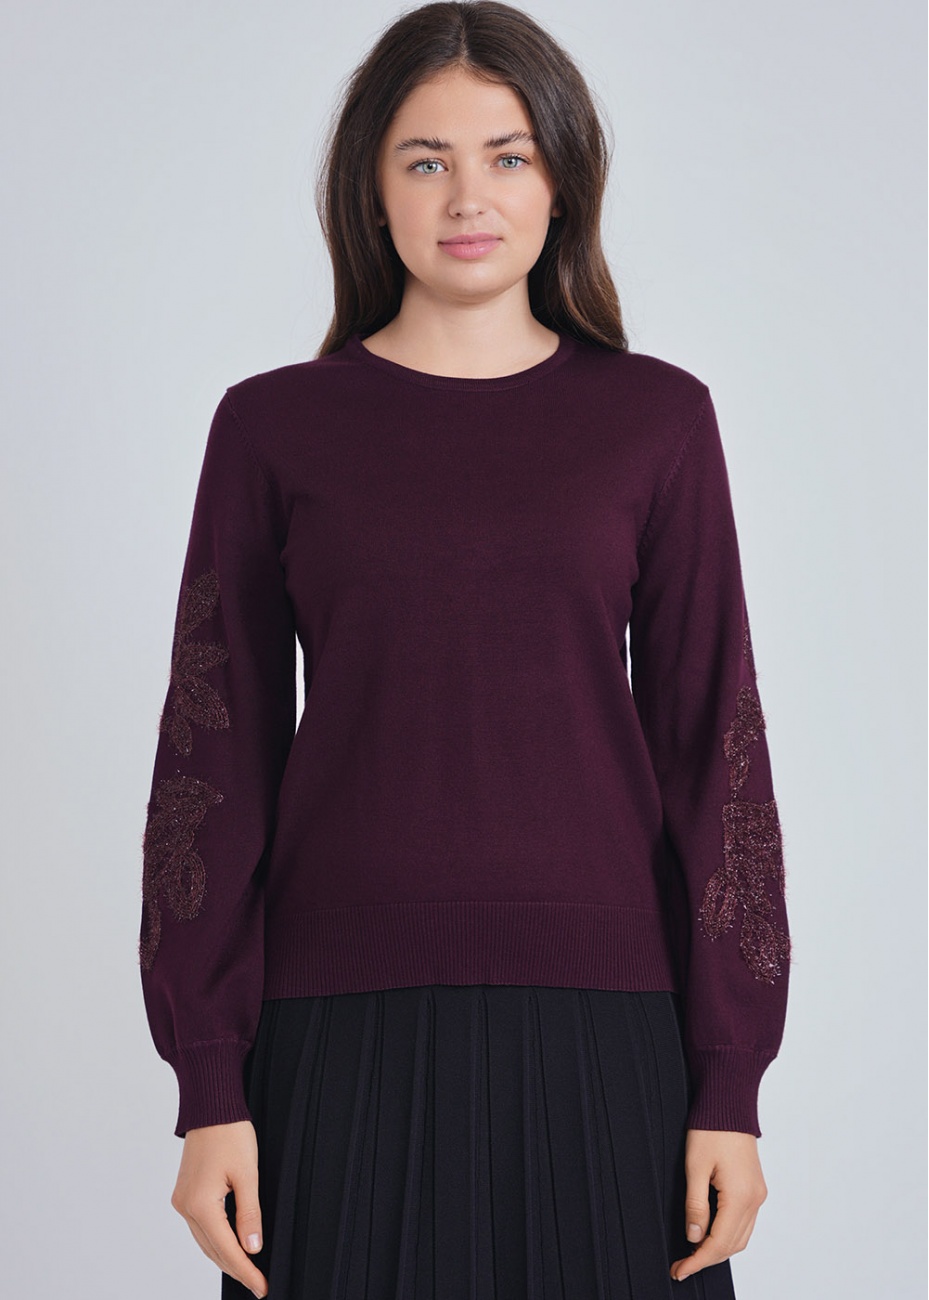 Embrace Elegance: Burgundy Sweater with Detailed Sleeve Design